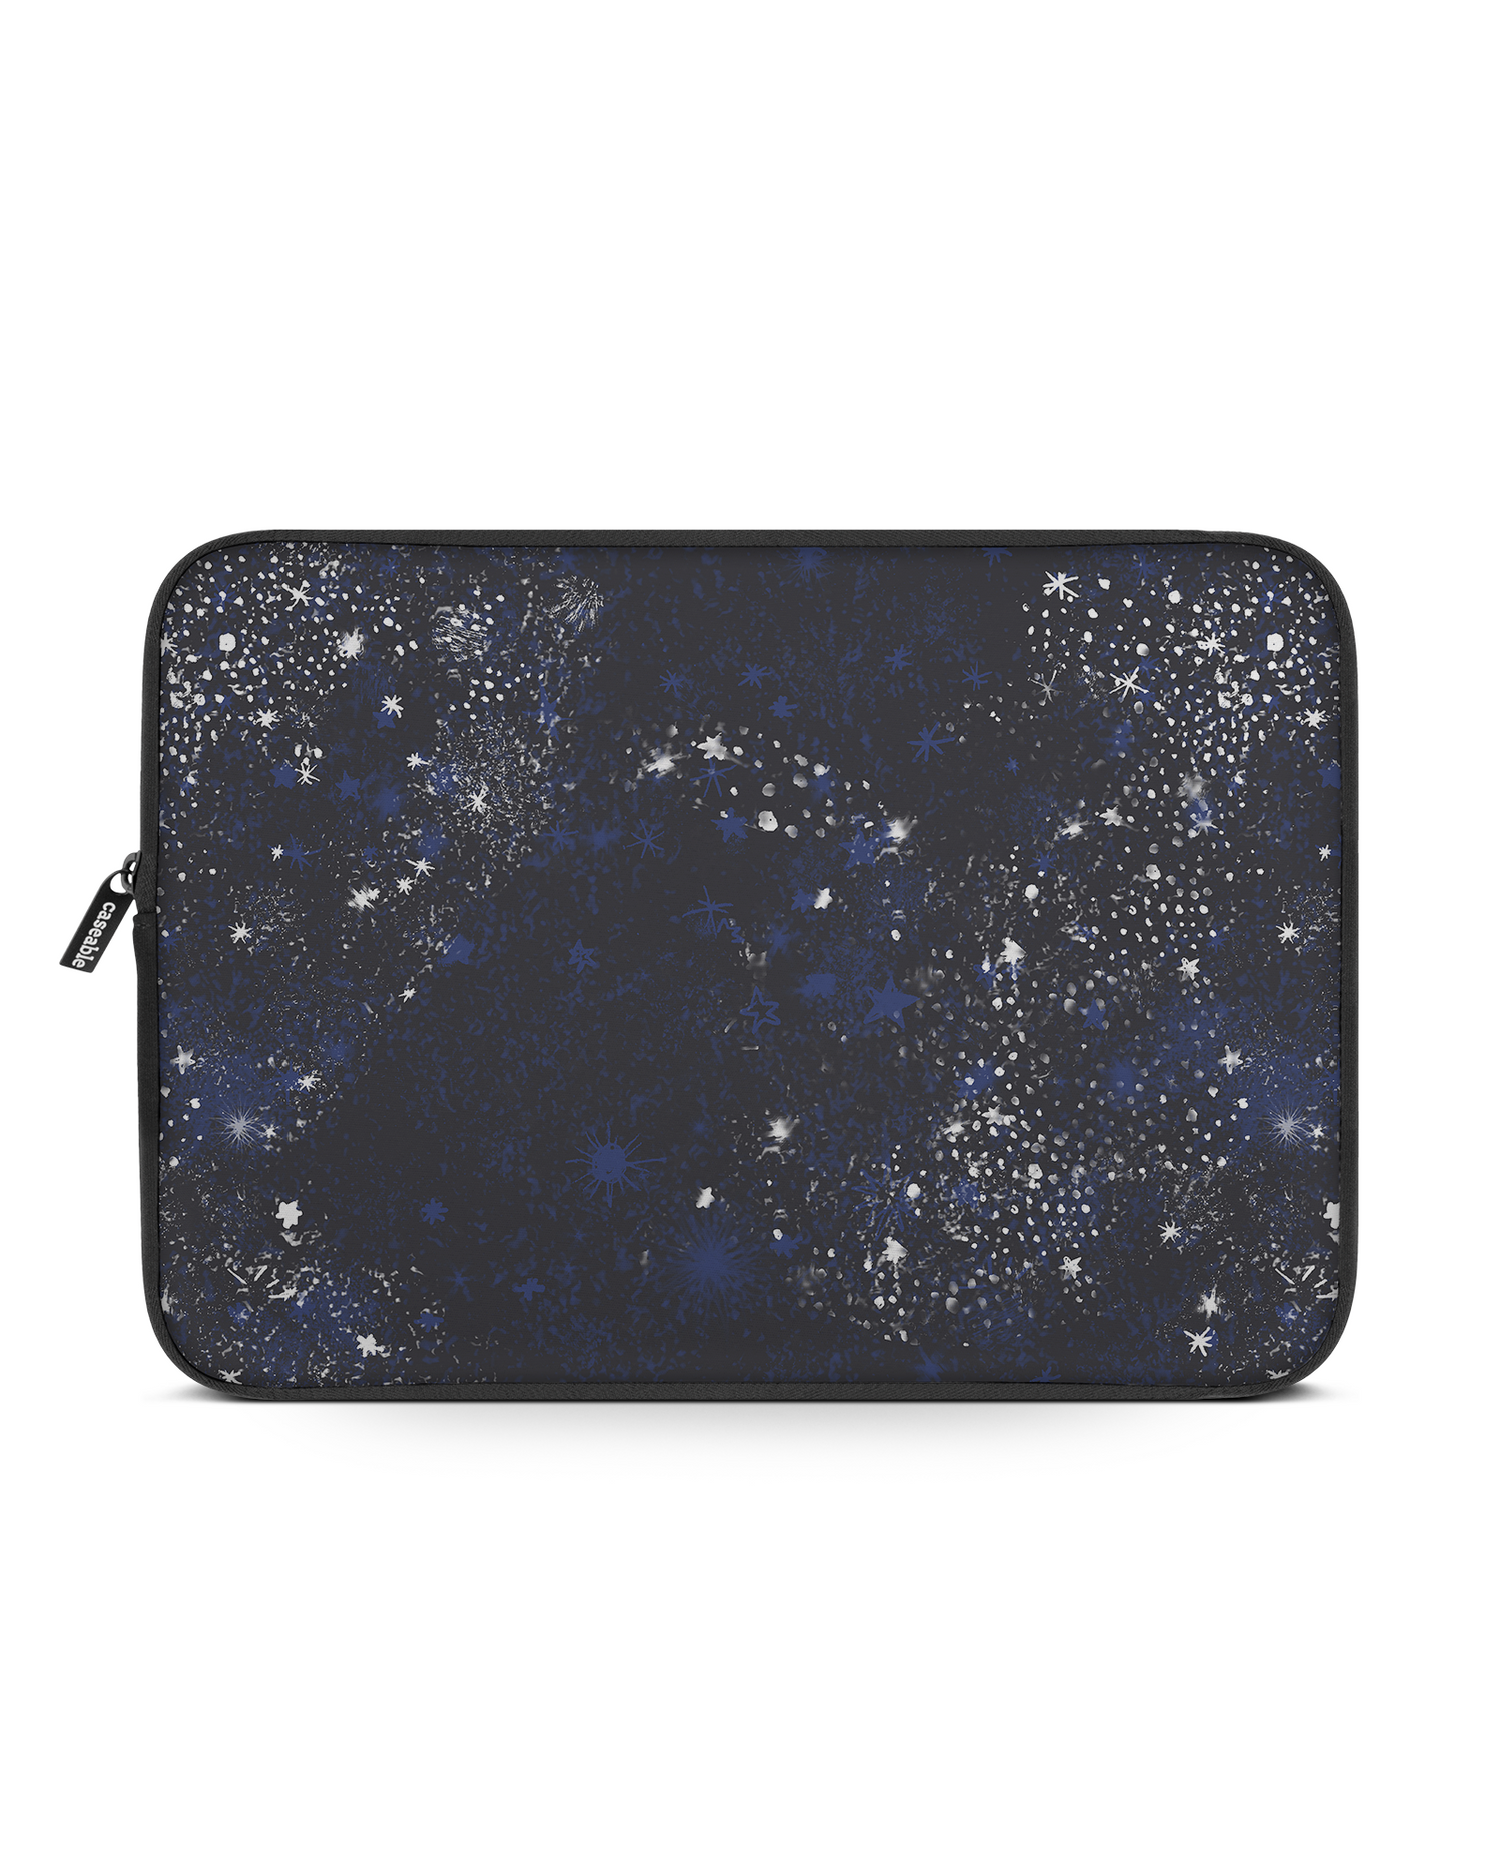 Starry Night Sky Laptophülle 16 Zoll: Vorderansicht